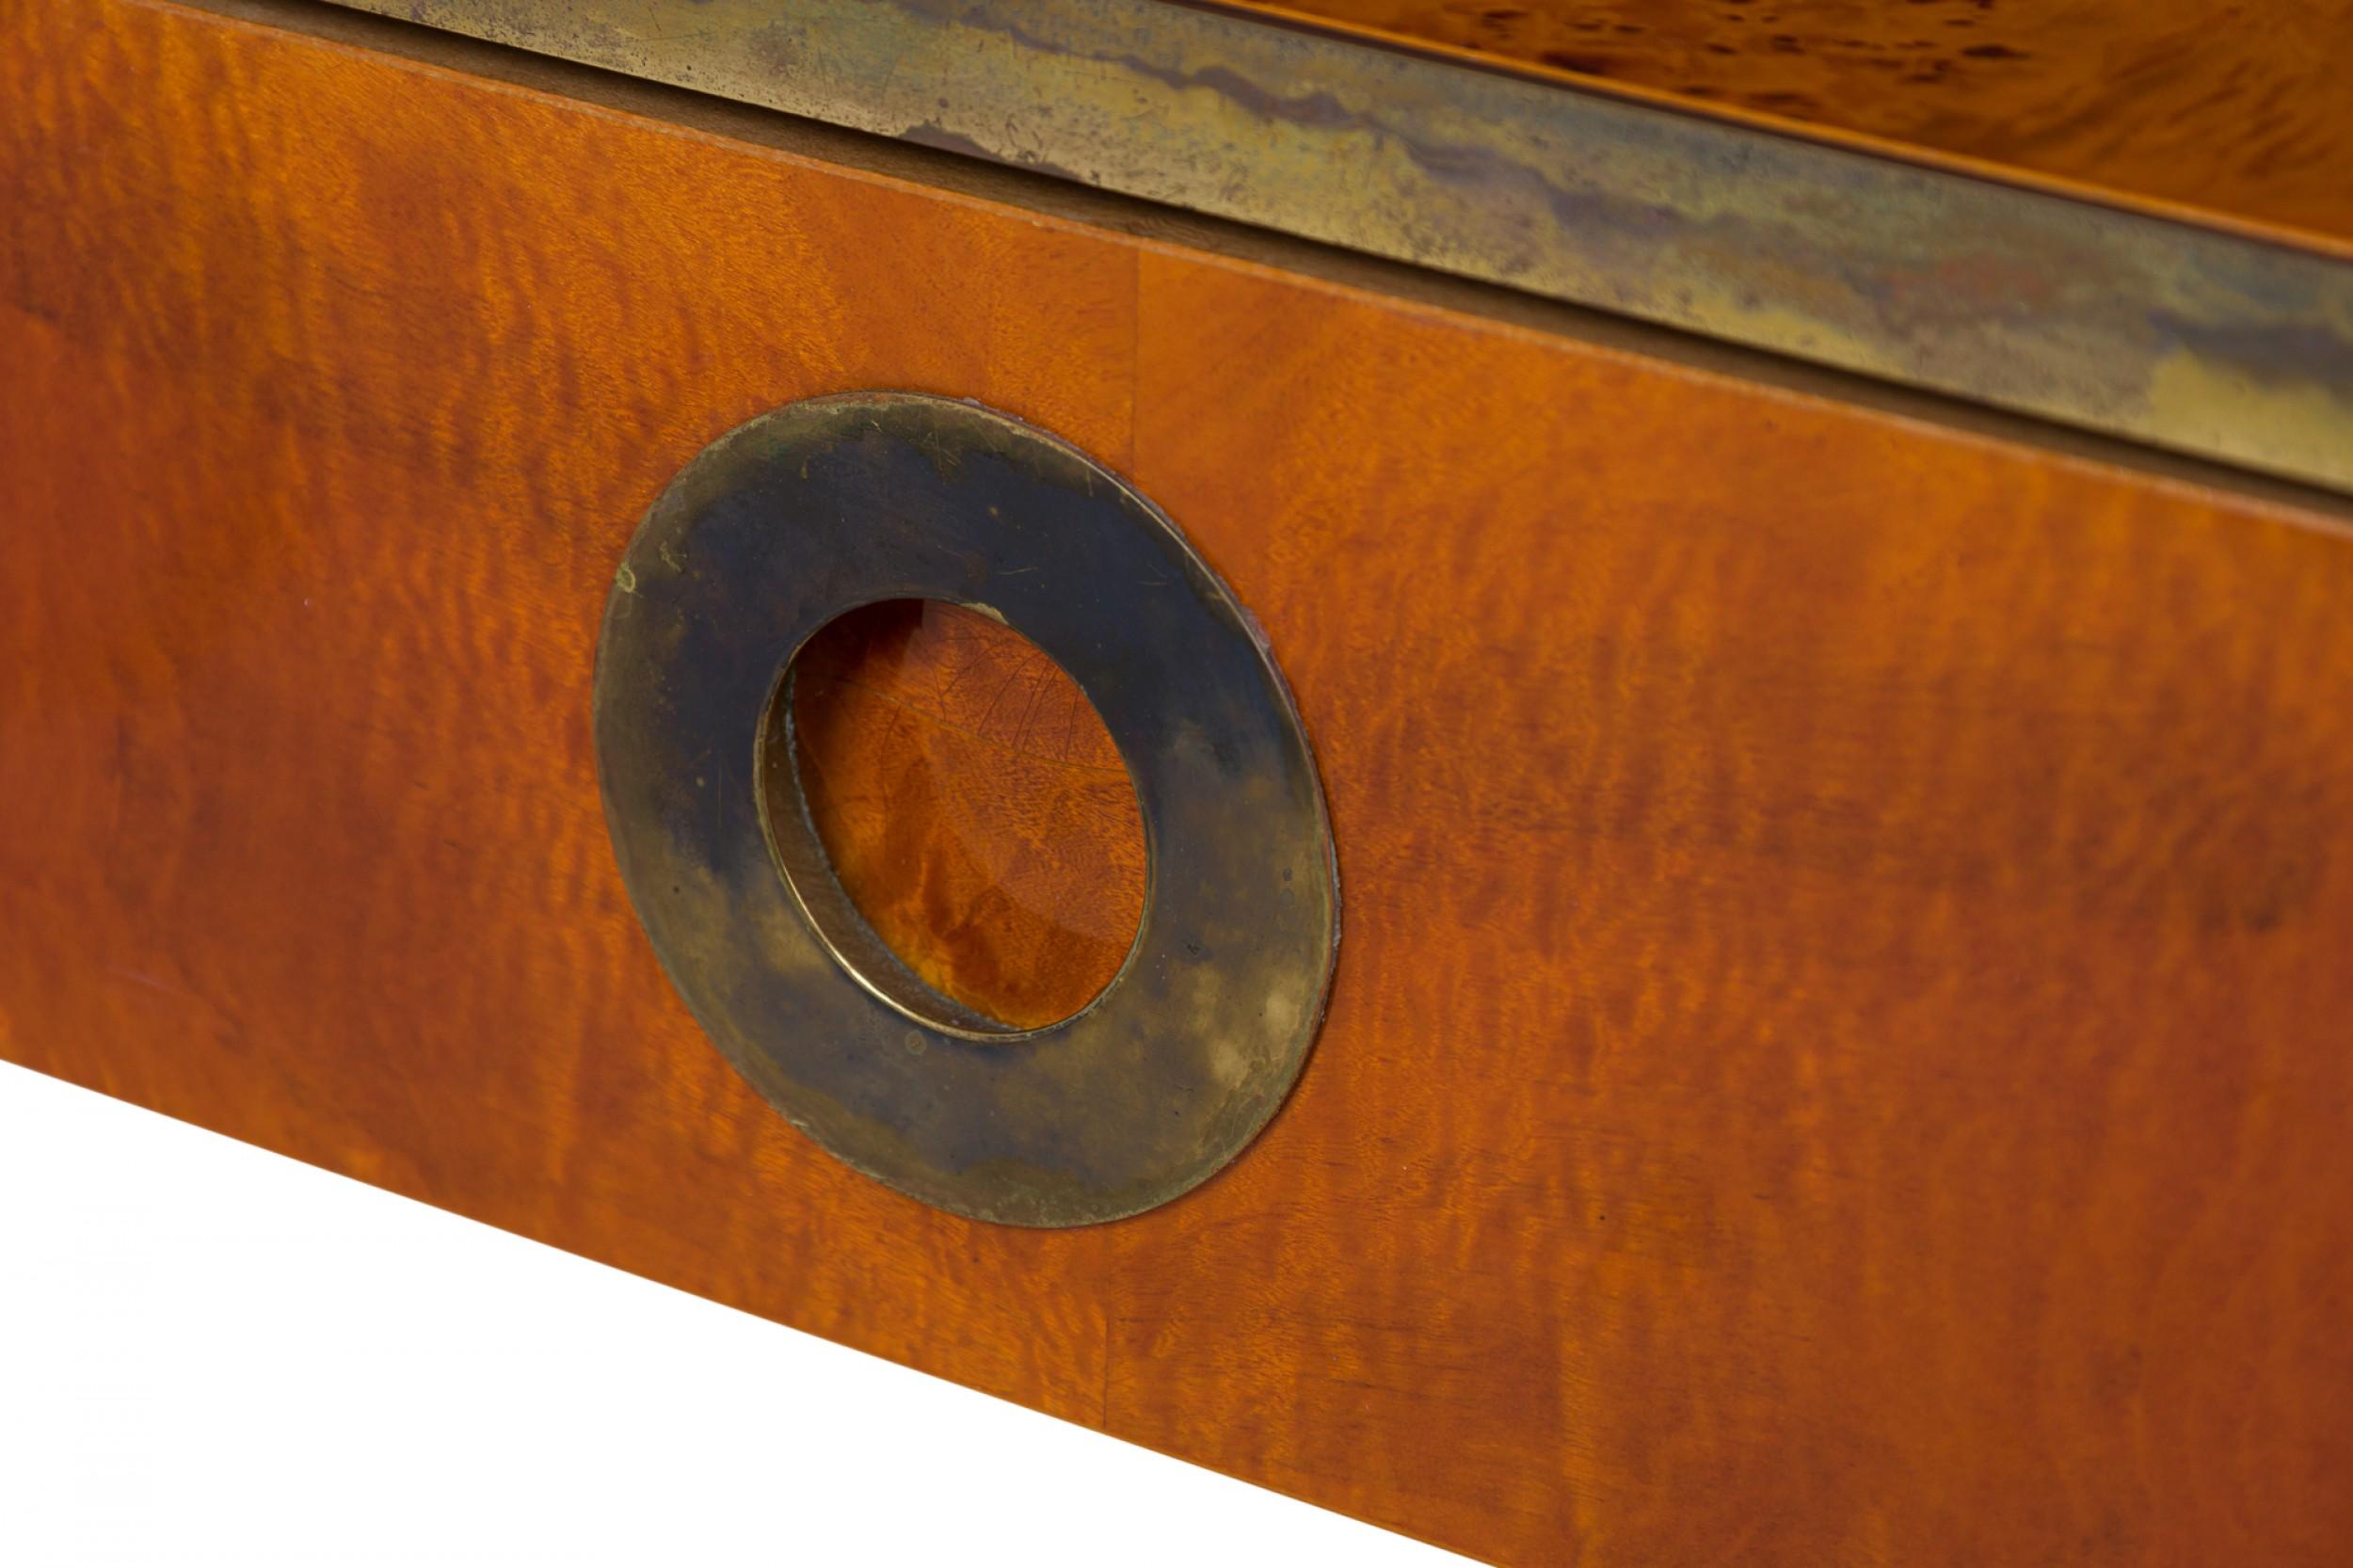 Pierre Cardin American Modern Burled Walnut, Chrome & Brass Console Table For Sale 2